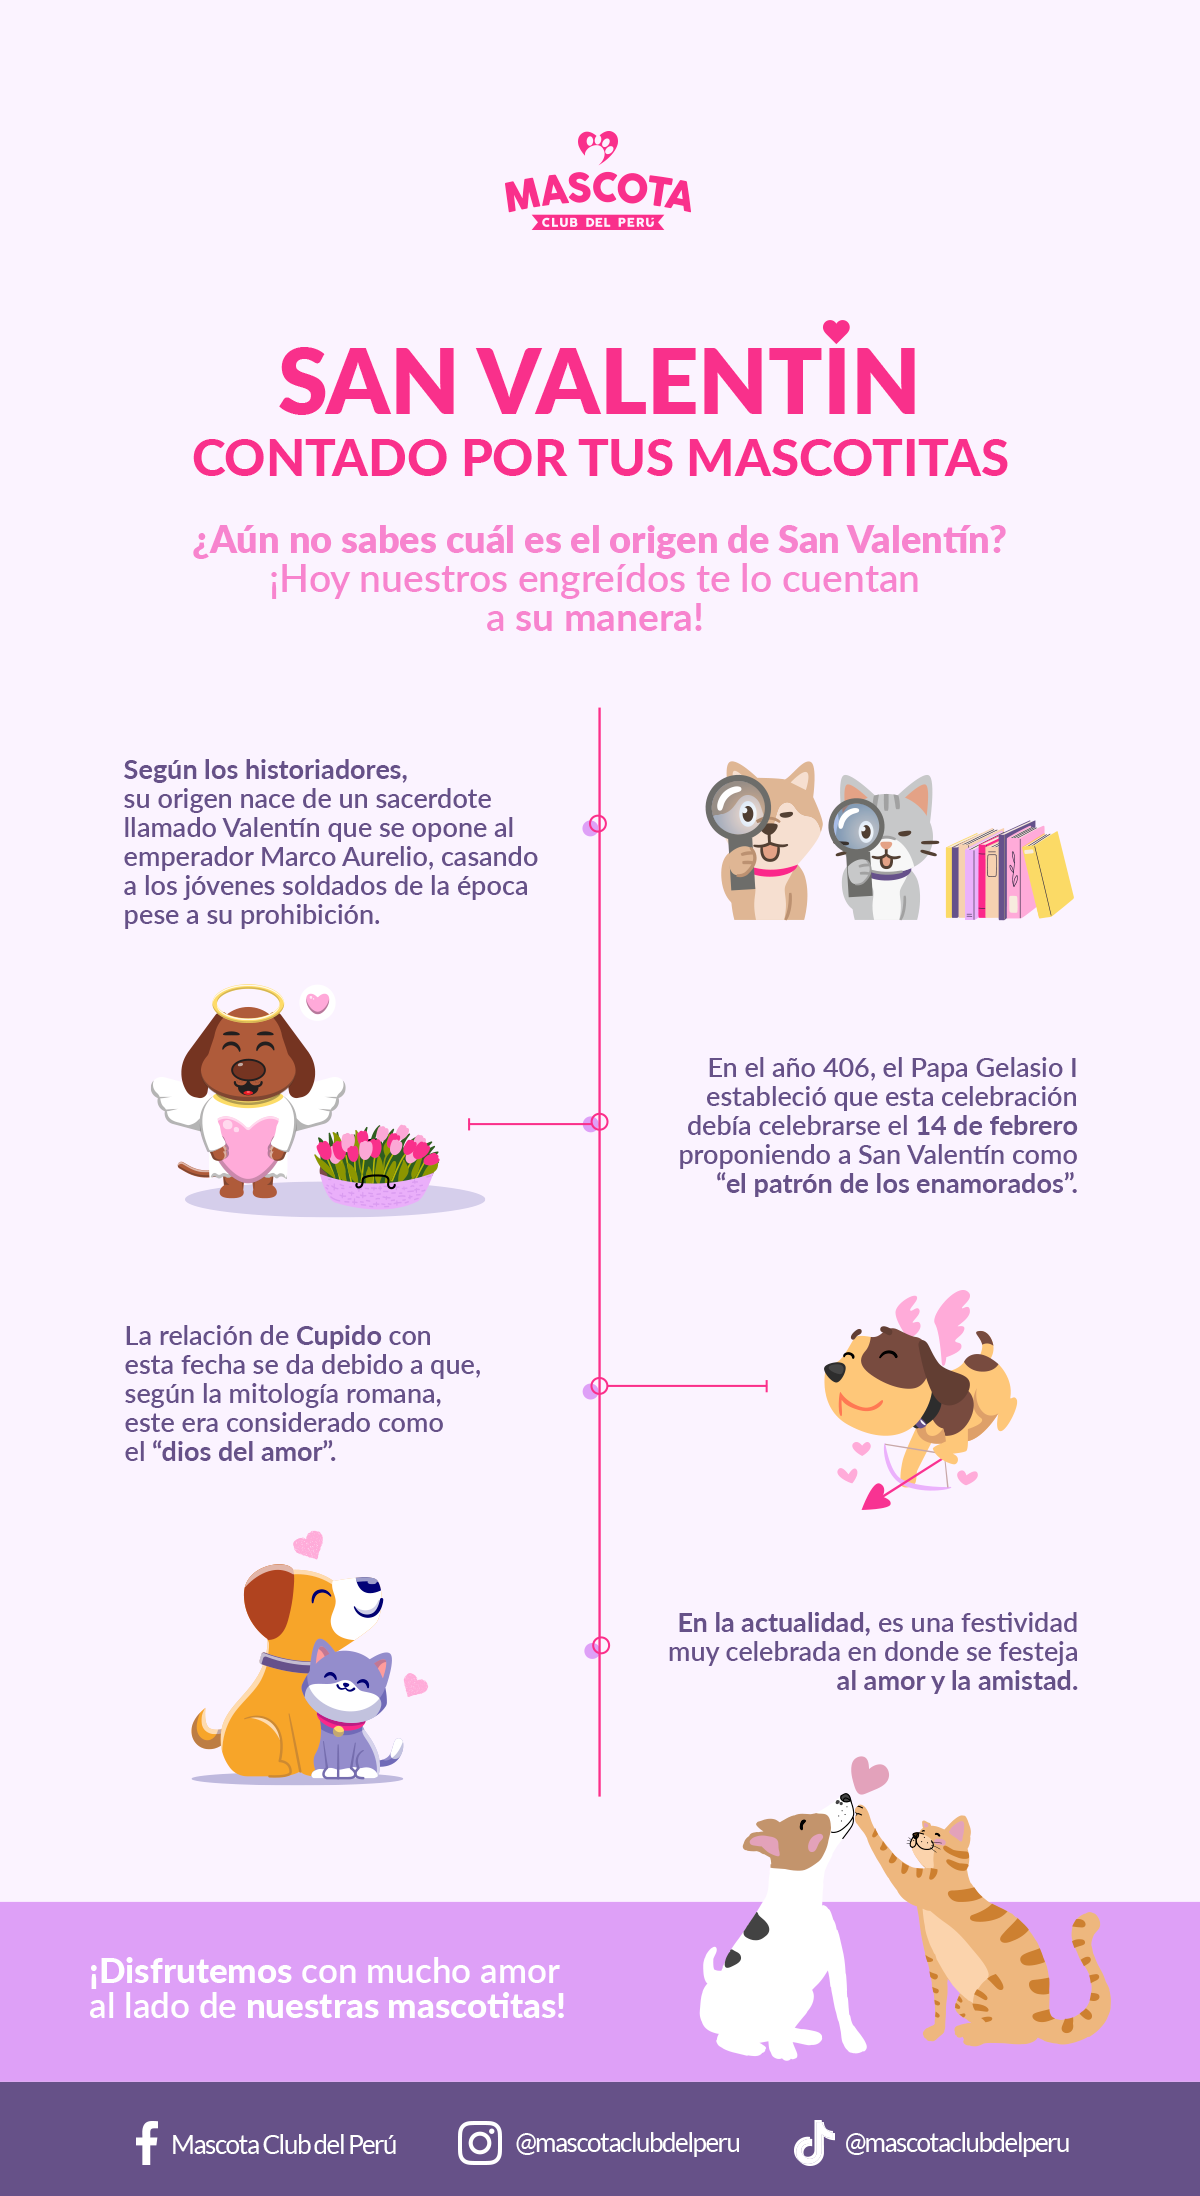 San Valentín contado por tus mascotitas. - Mascota Club del Perú